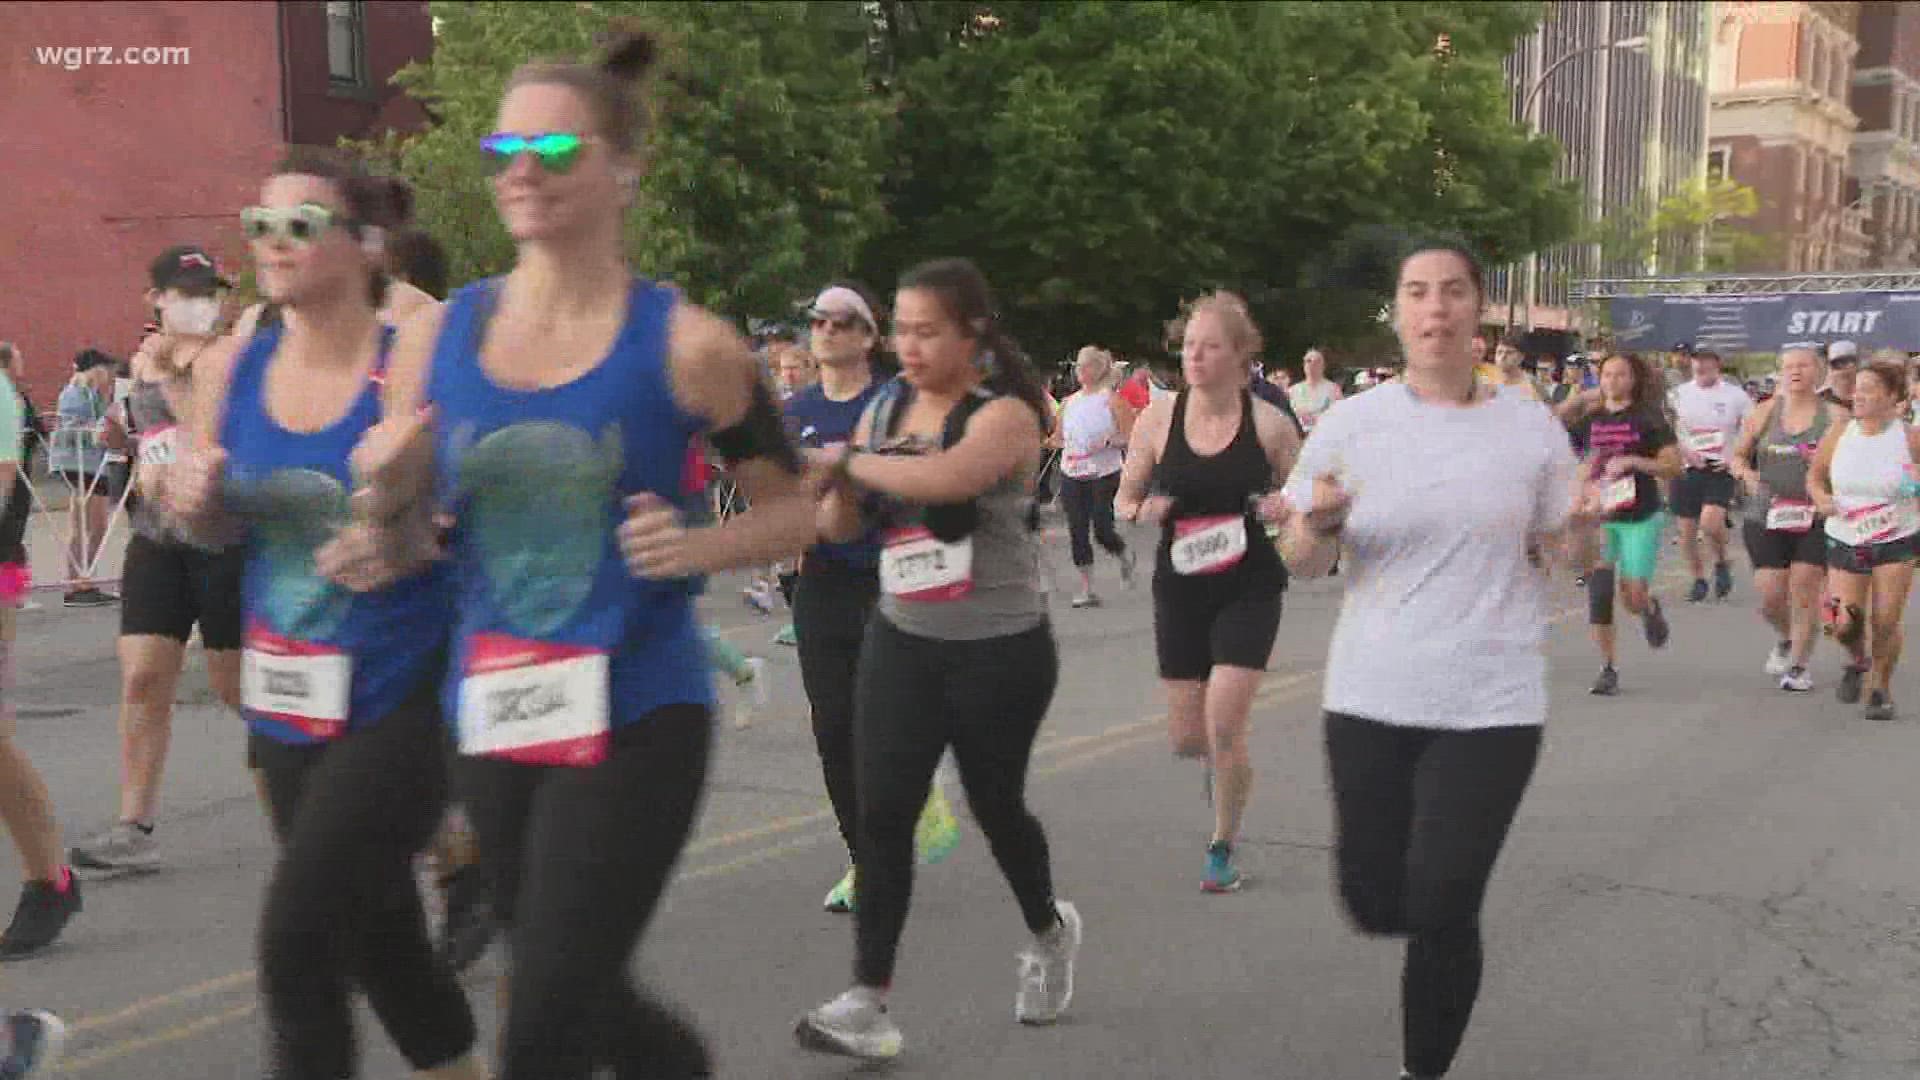 Buffalo Marathon raised $262,000 this year